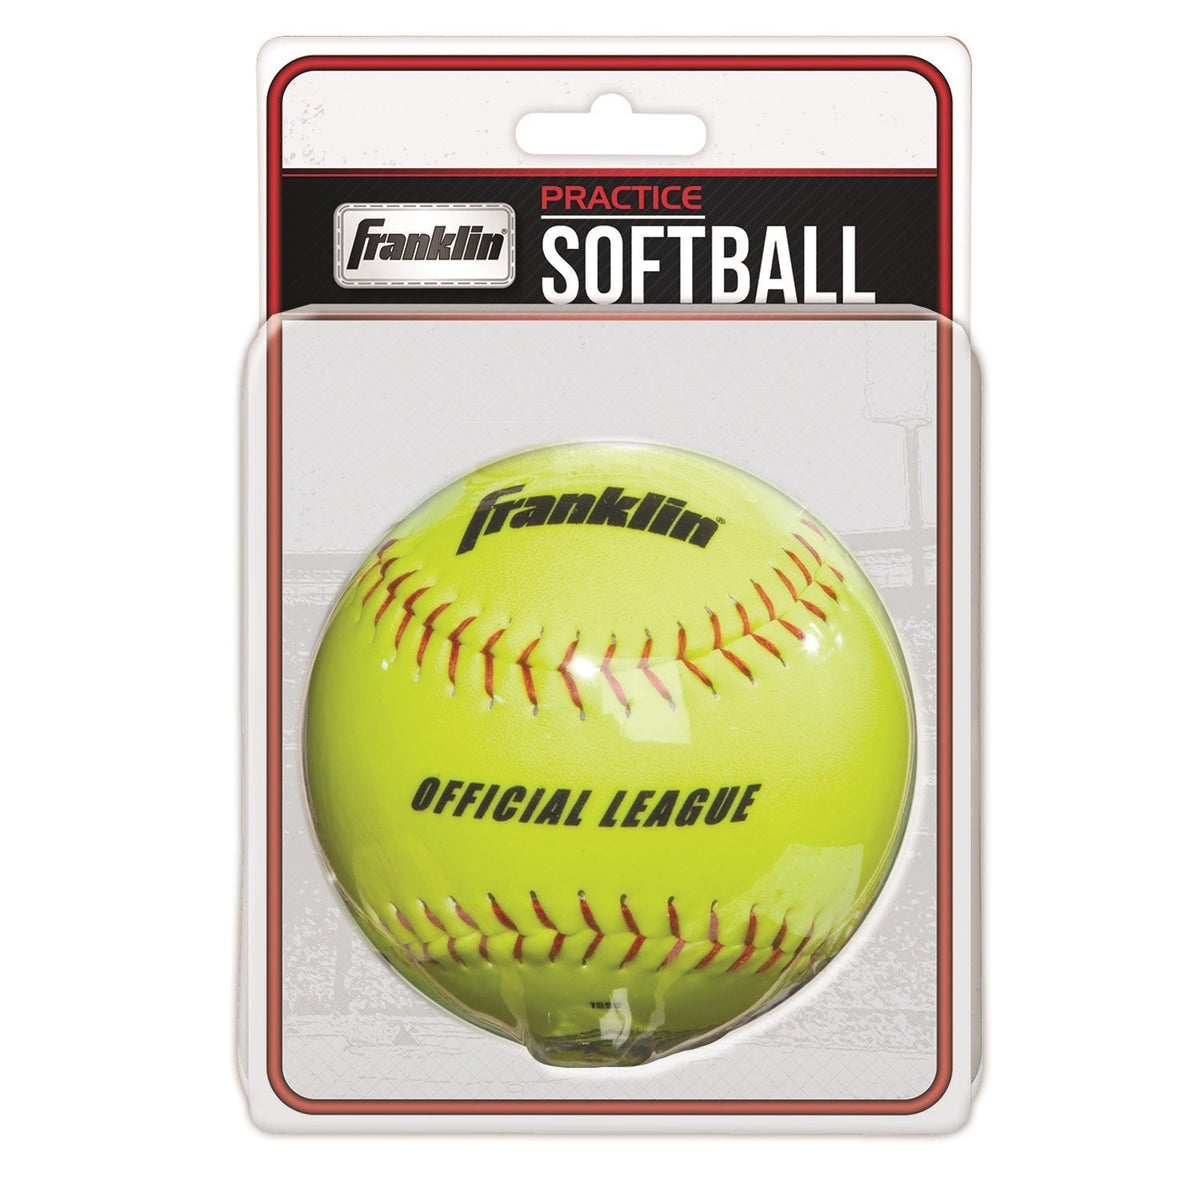 Franklin 10981 Practice Softballs, Yellow, 12"